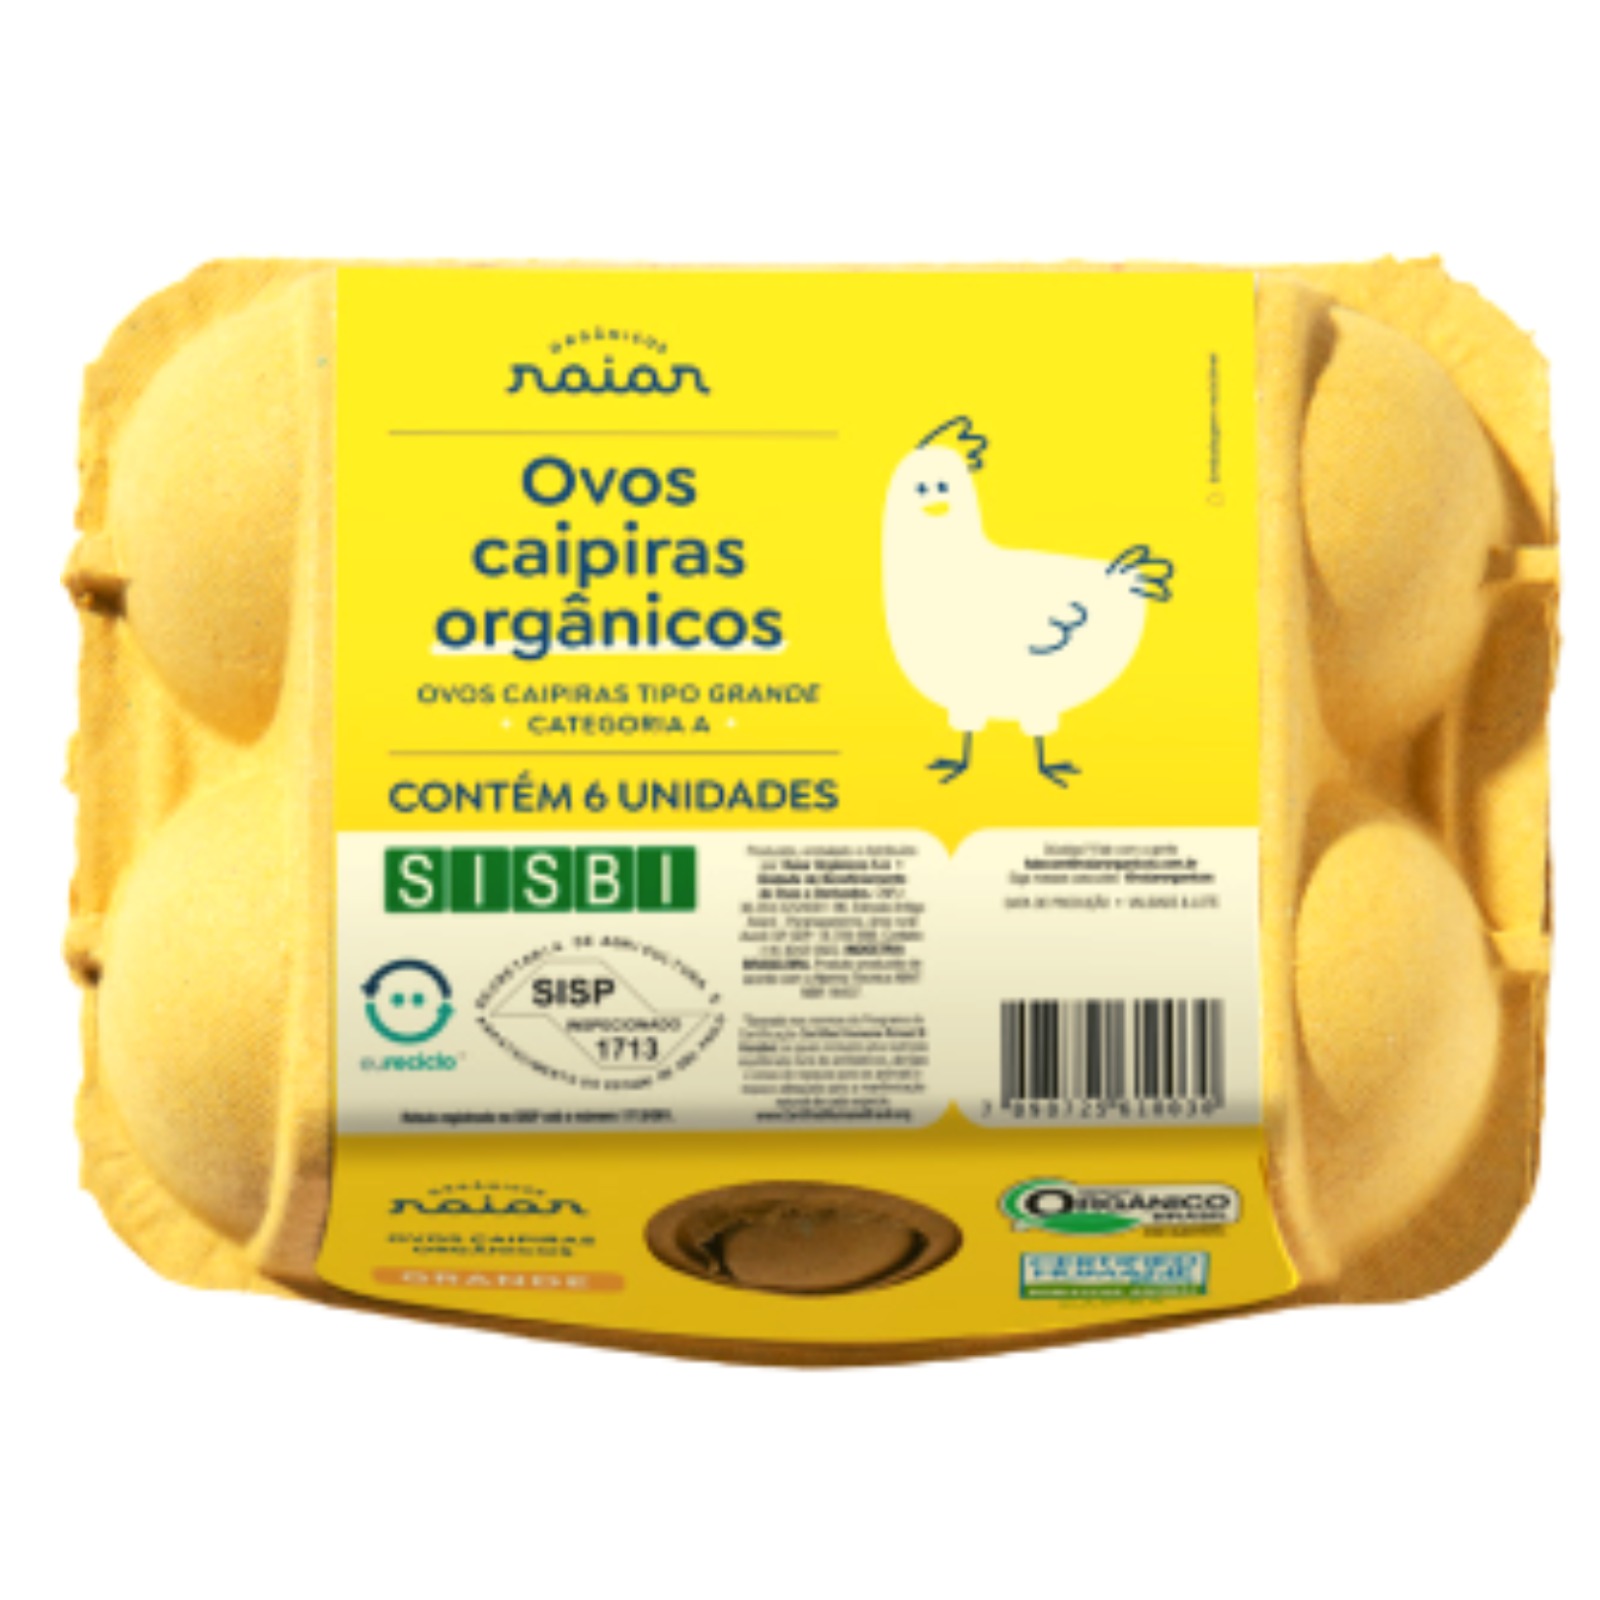 PASSATEMPO] A GALINHA DOS OVOS DE OURO #65 – Rubber Chicken